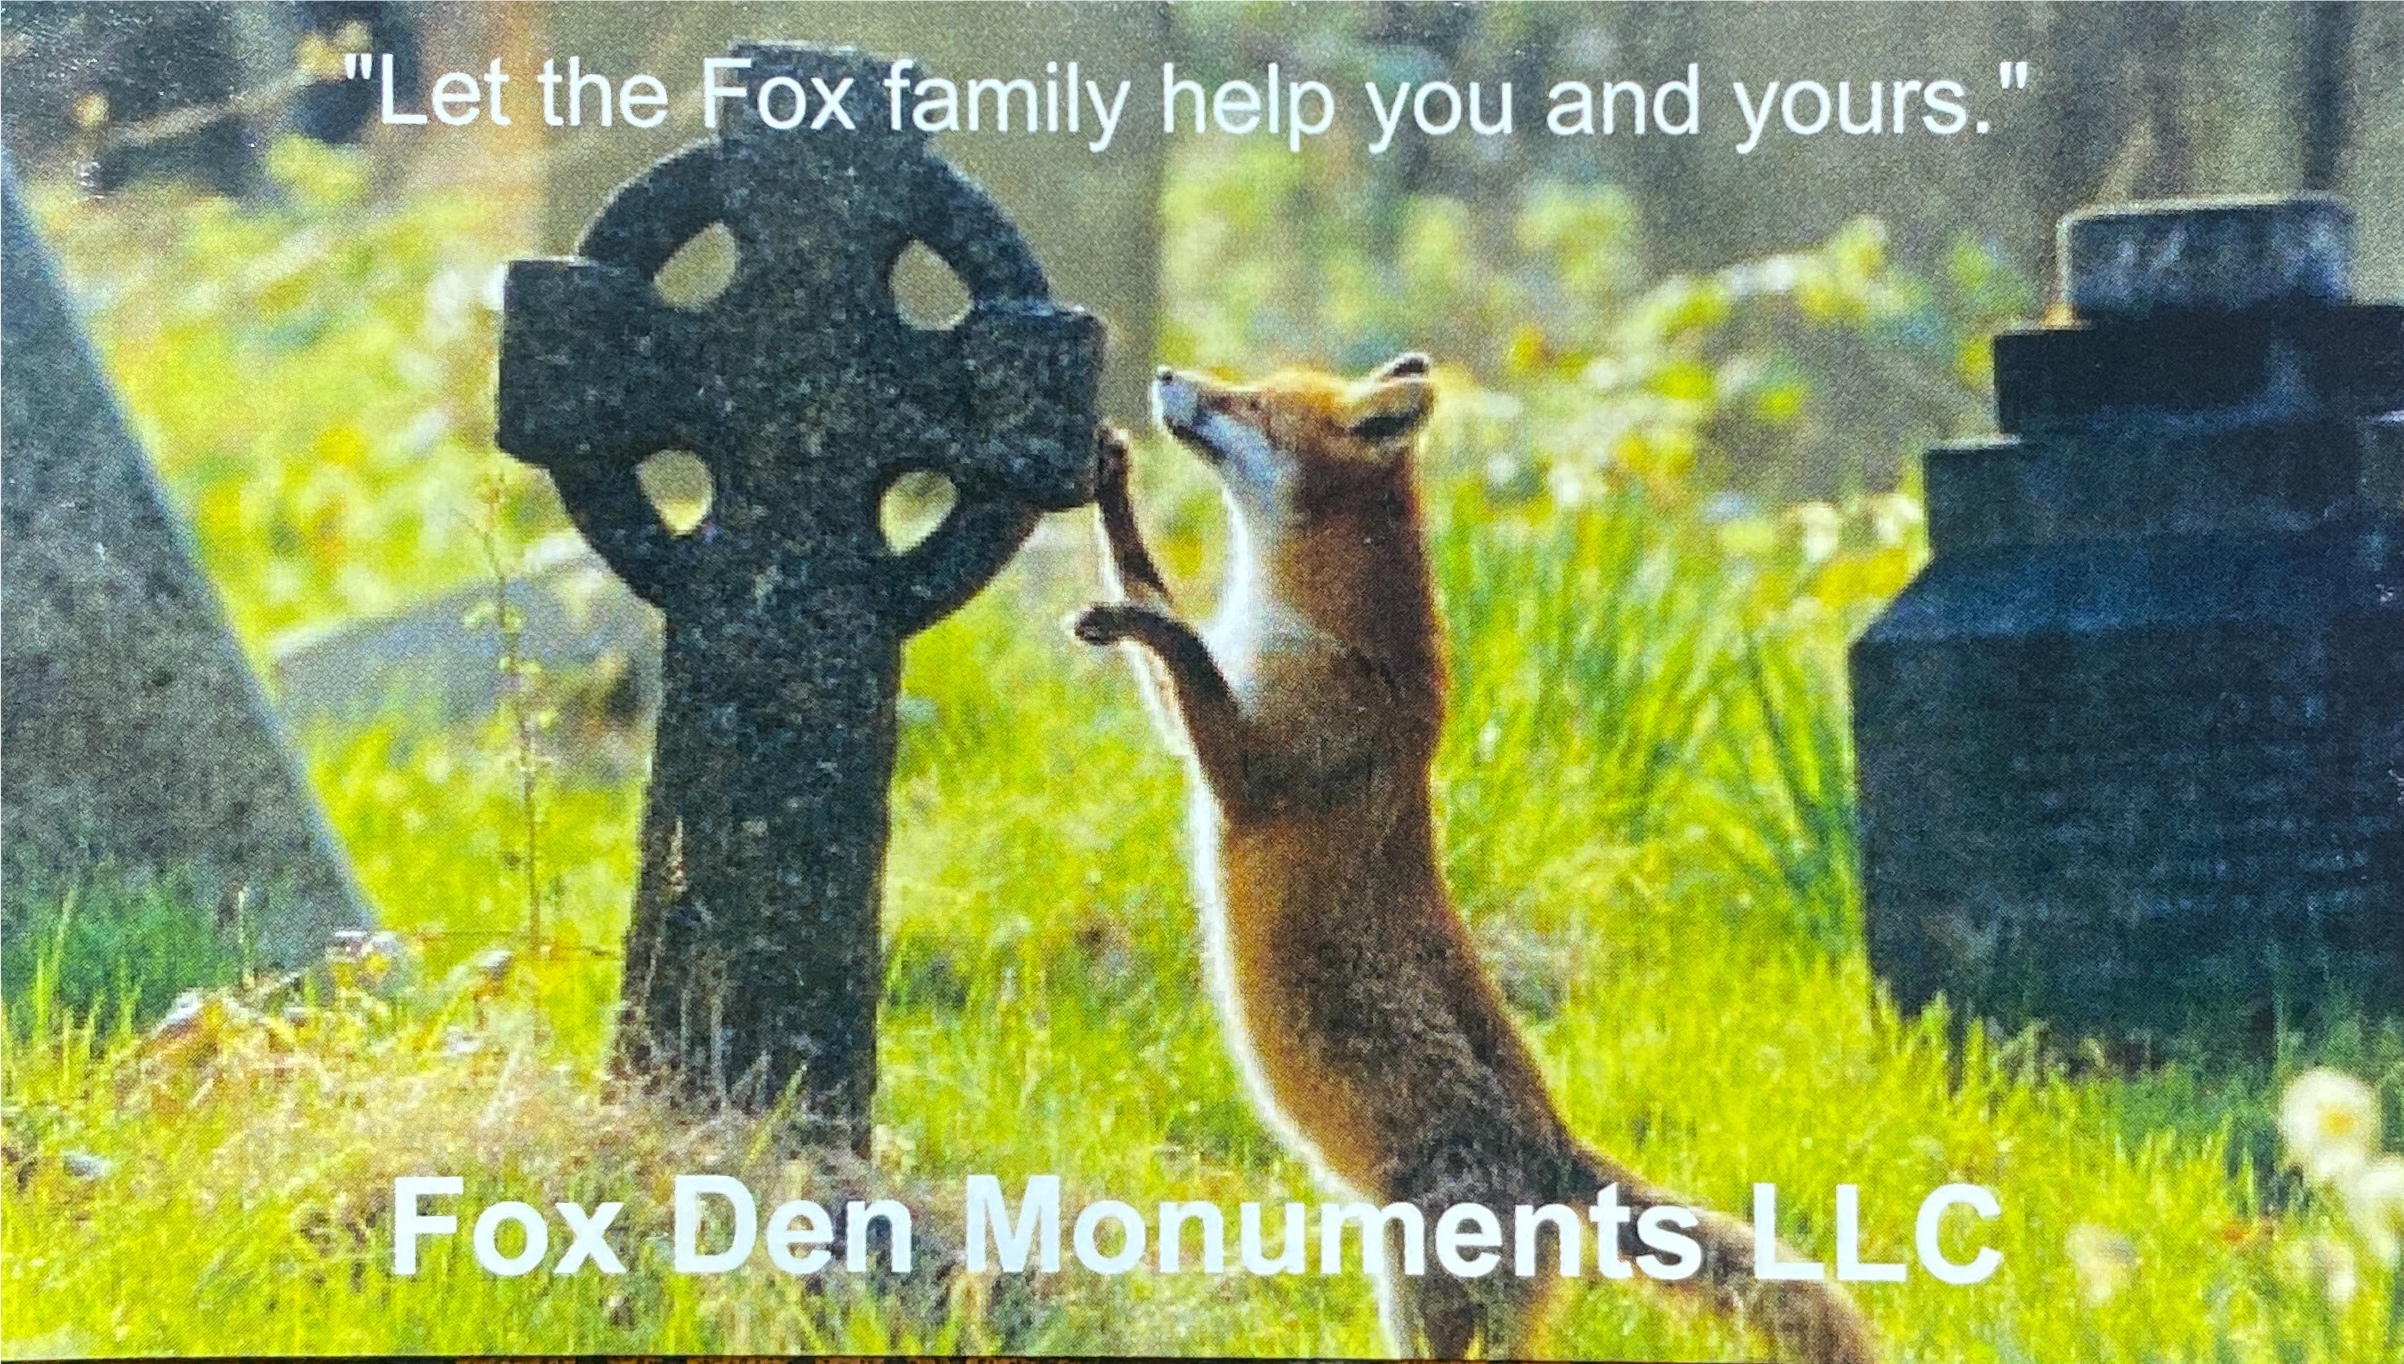 Fox Den Monuments